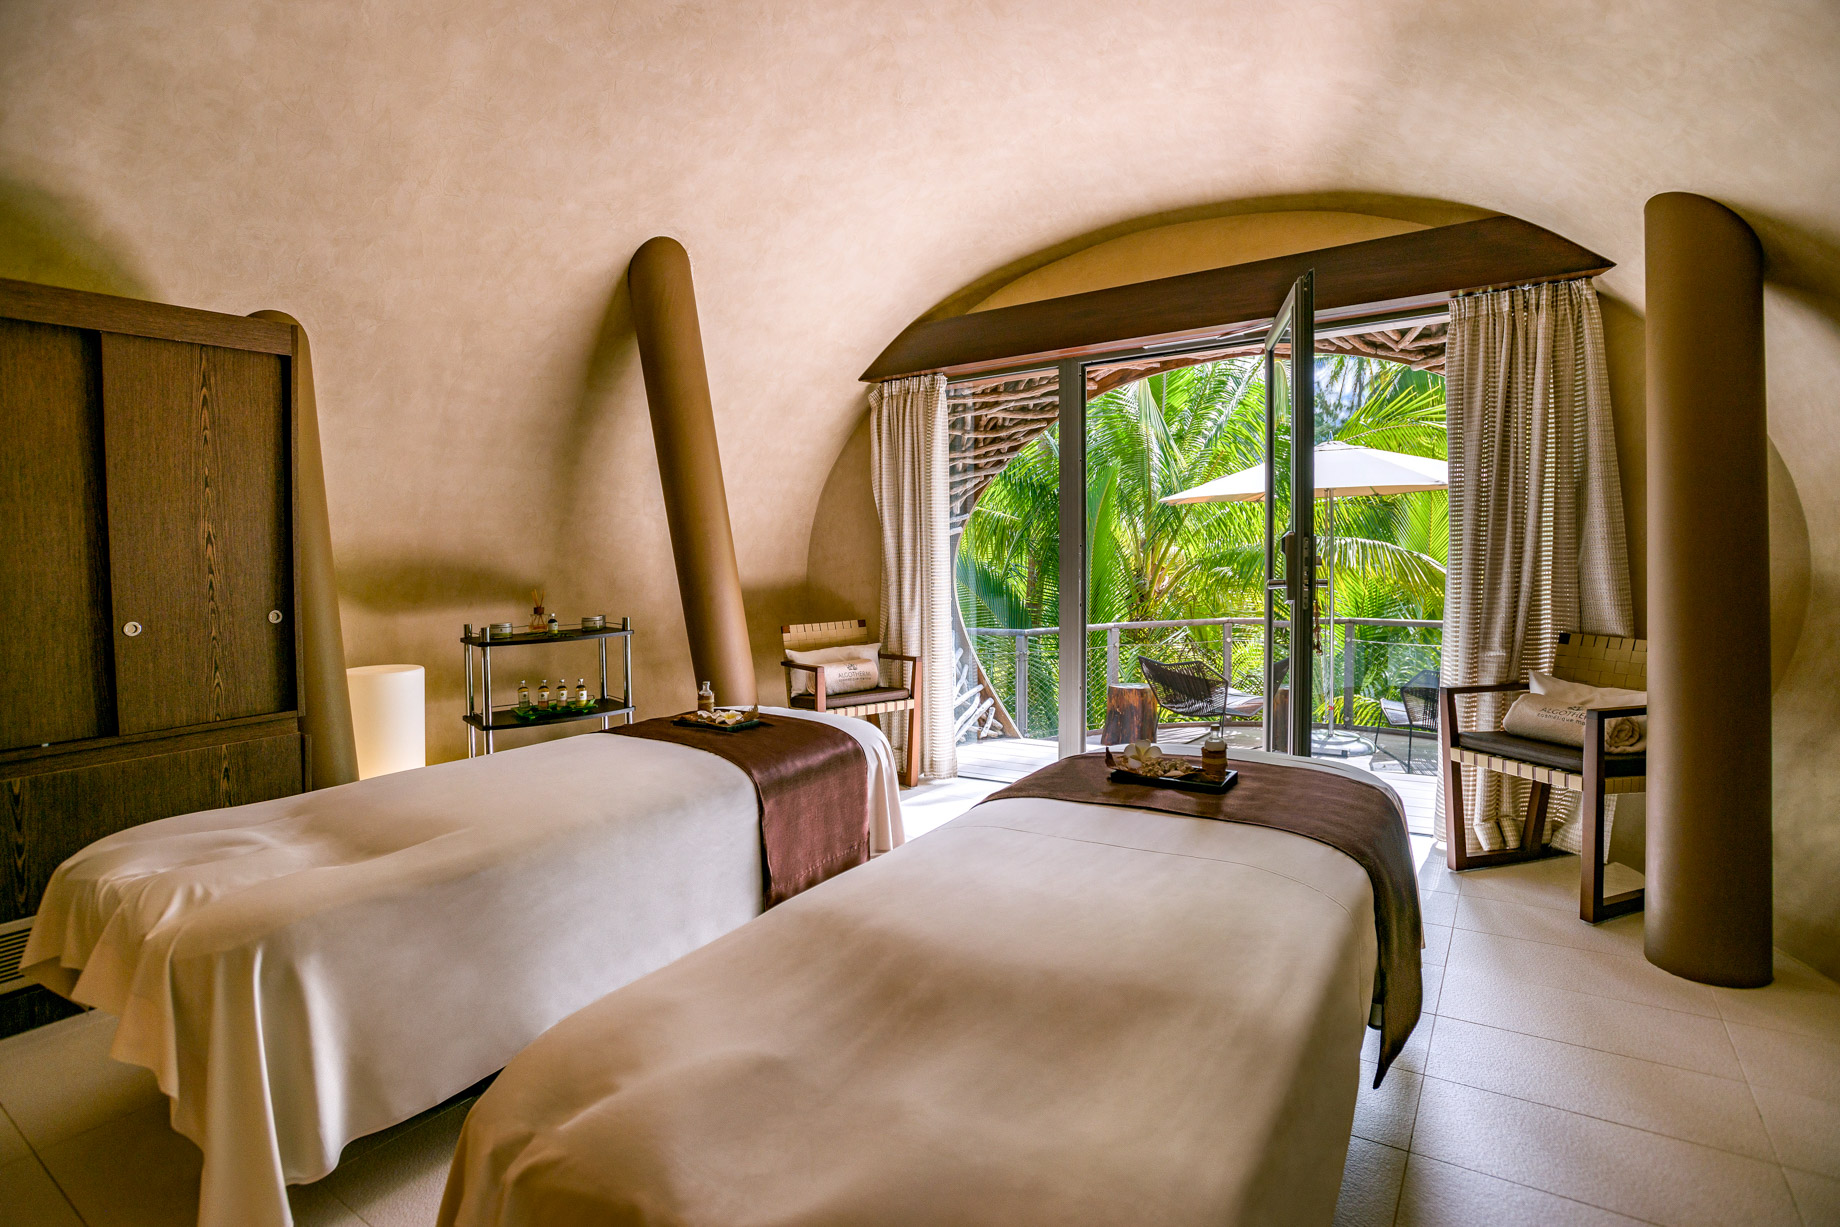 The Brando Resort – Tetiaroa Private Island, French Polynesia – Spa Treatment Room Deck View